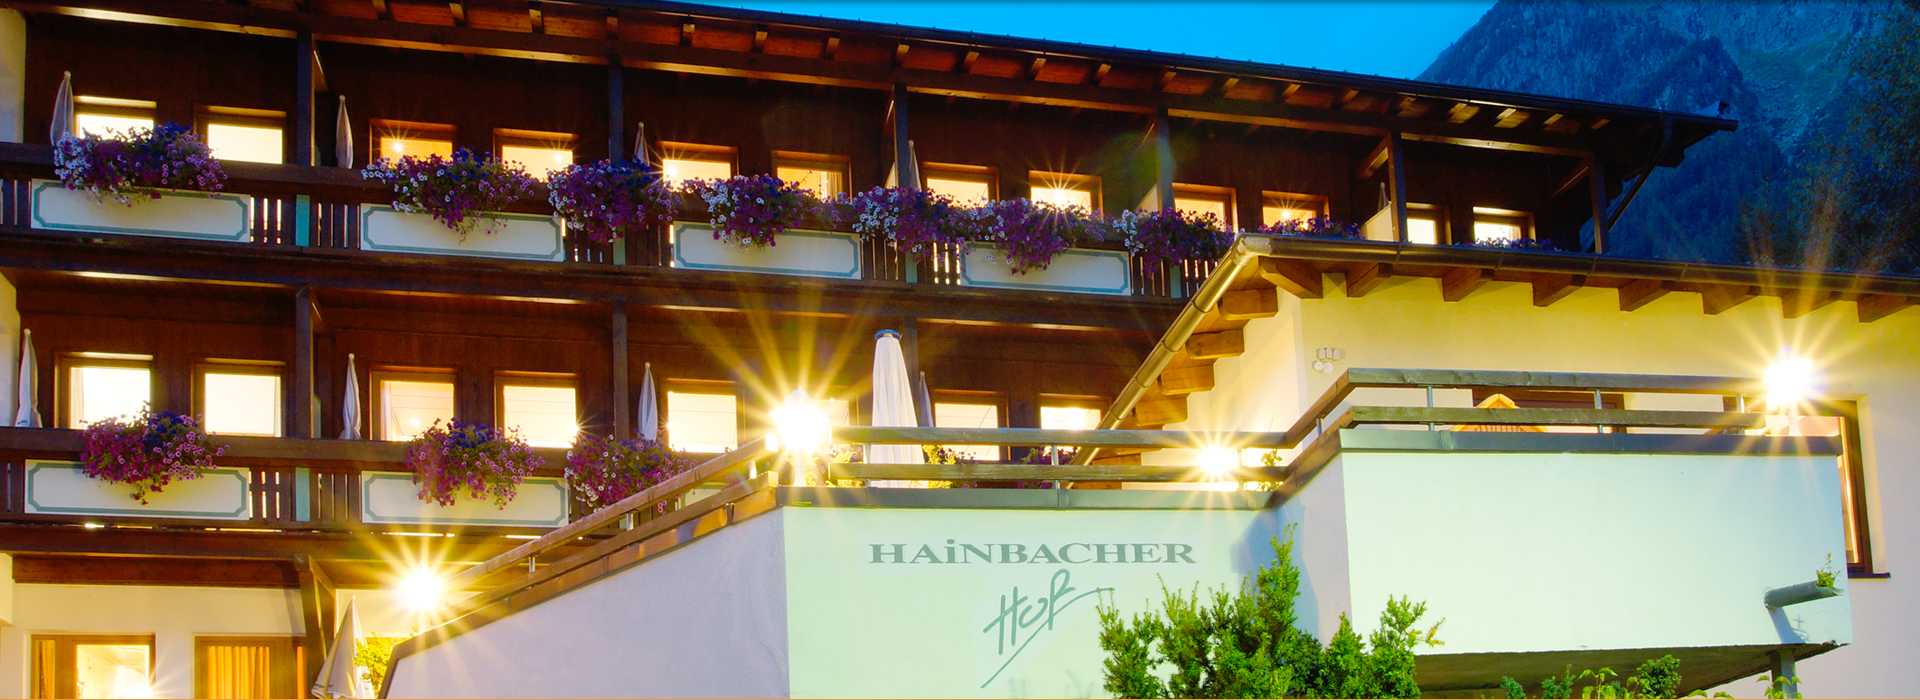 Hainbacherhof